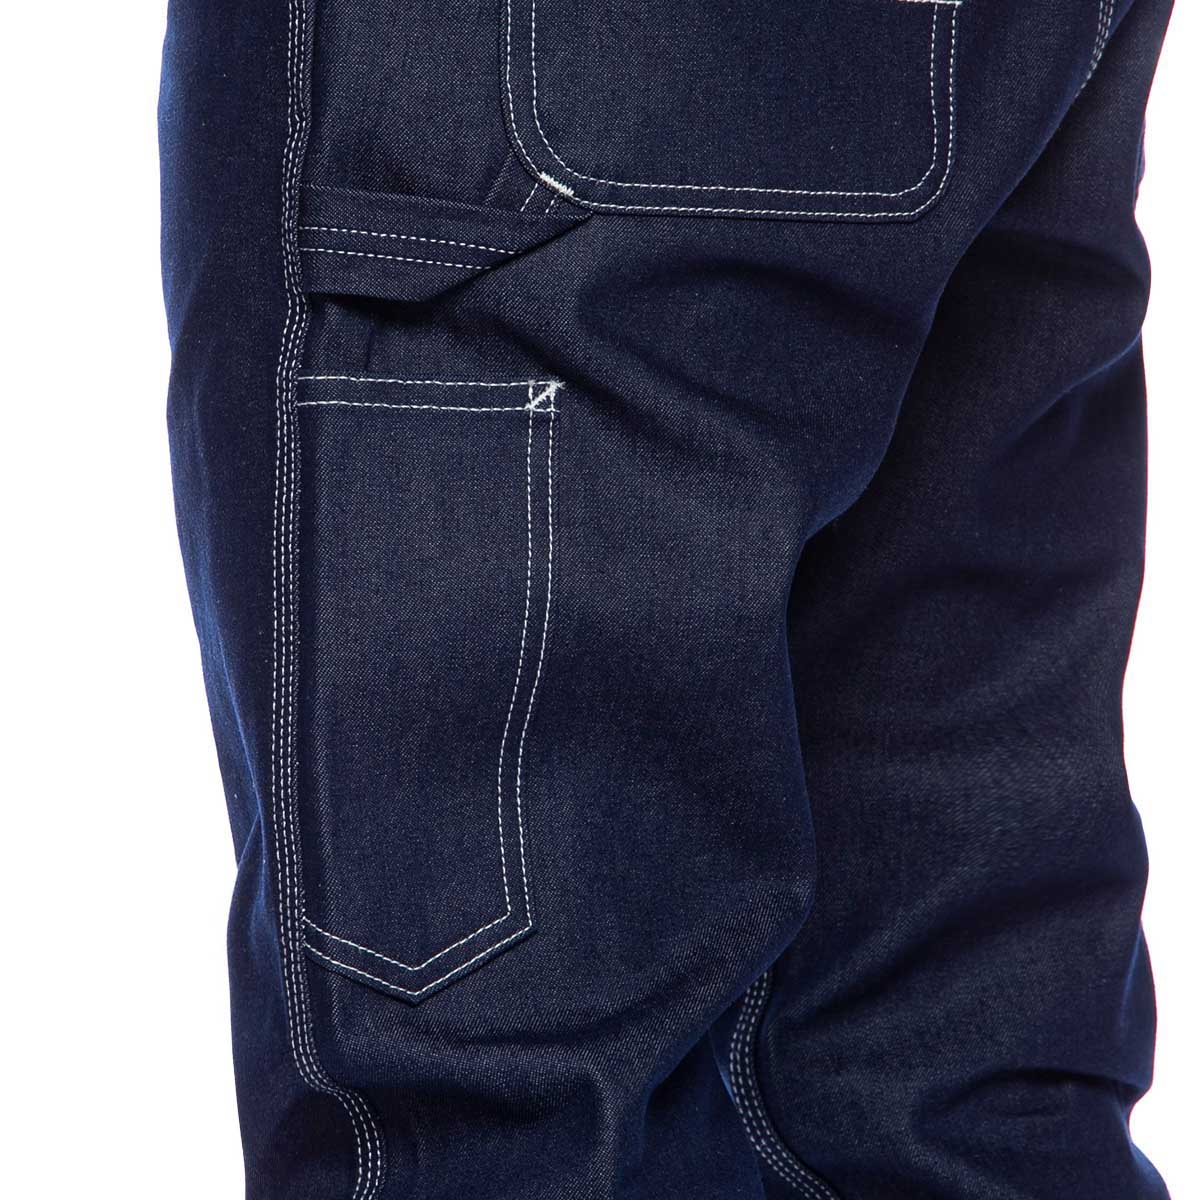 Carhartt Ruck Single Knee Pant Shop Clearance, Save 56% | jlcatj.gob.mx